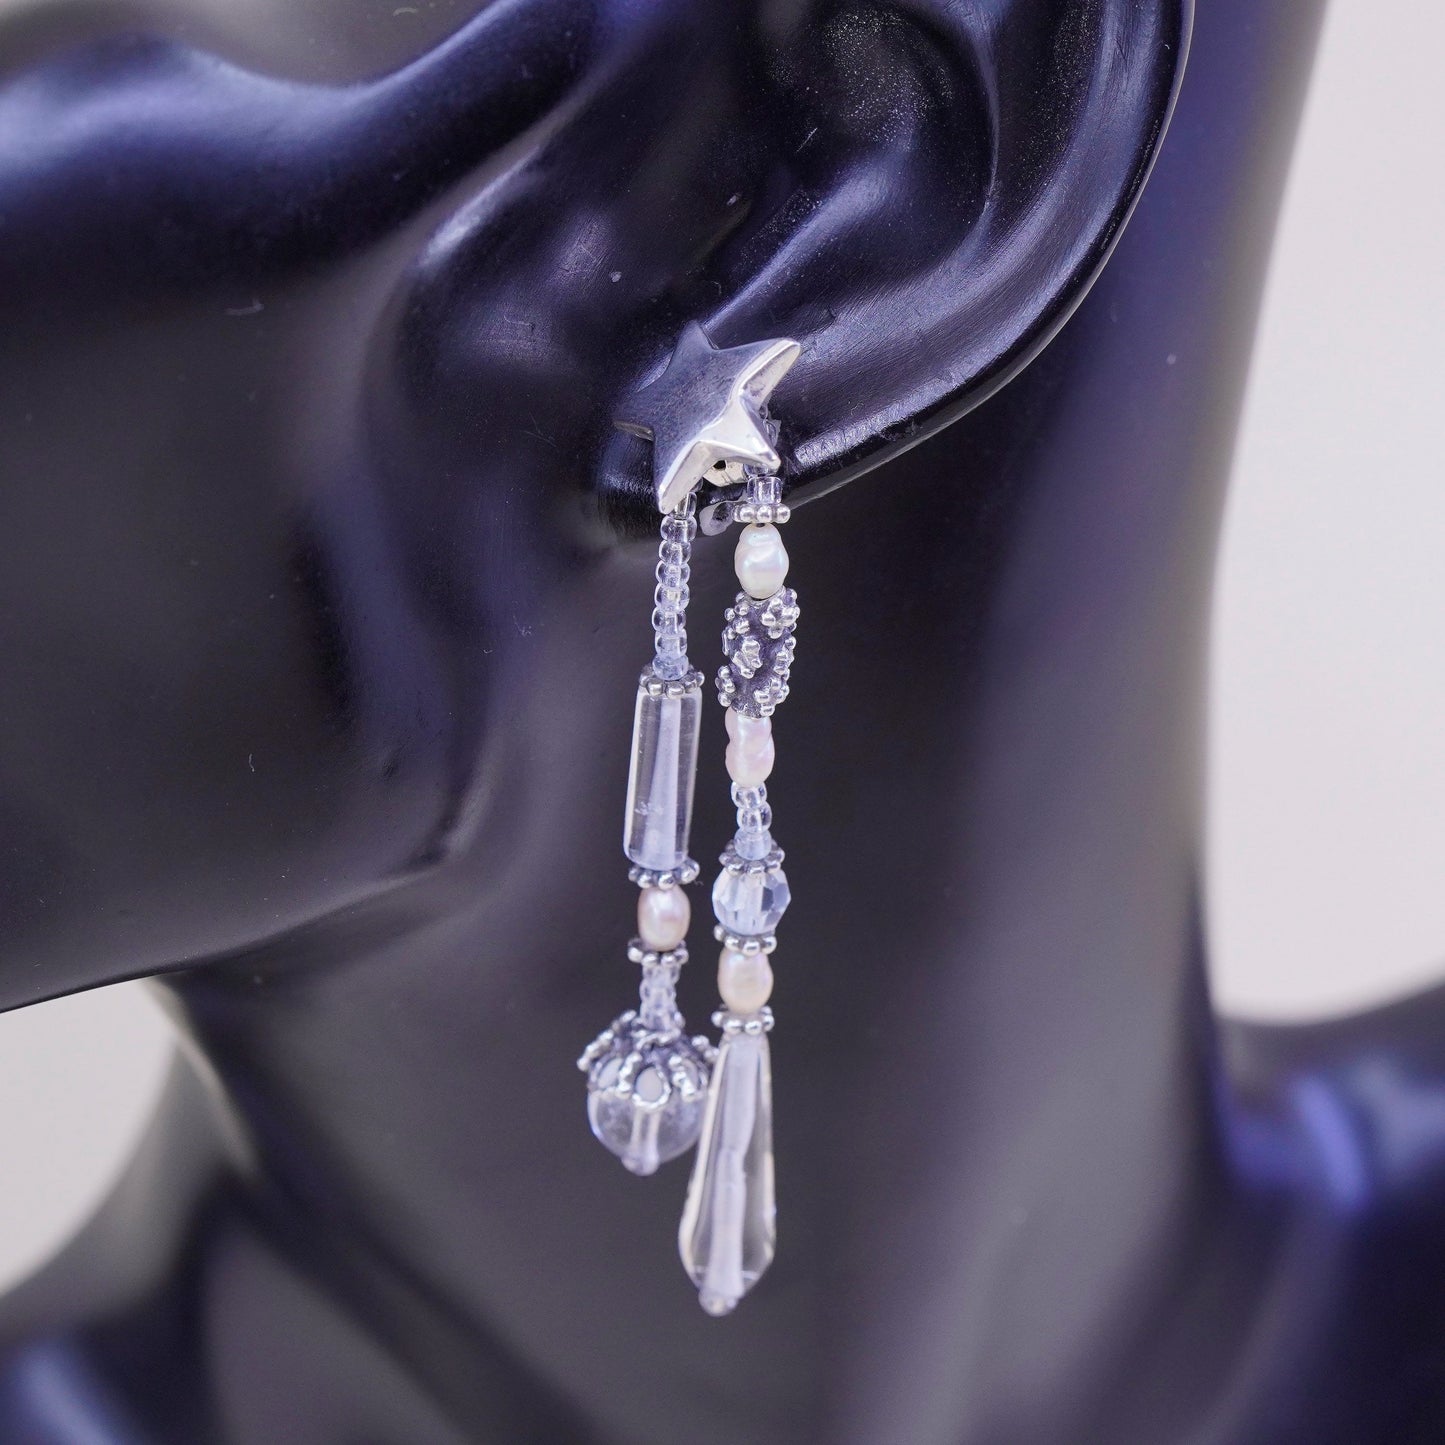 Sterling silver earrings, 925 star studs w/ cluster beads N pearl teardrop